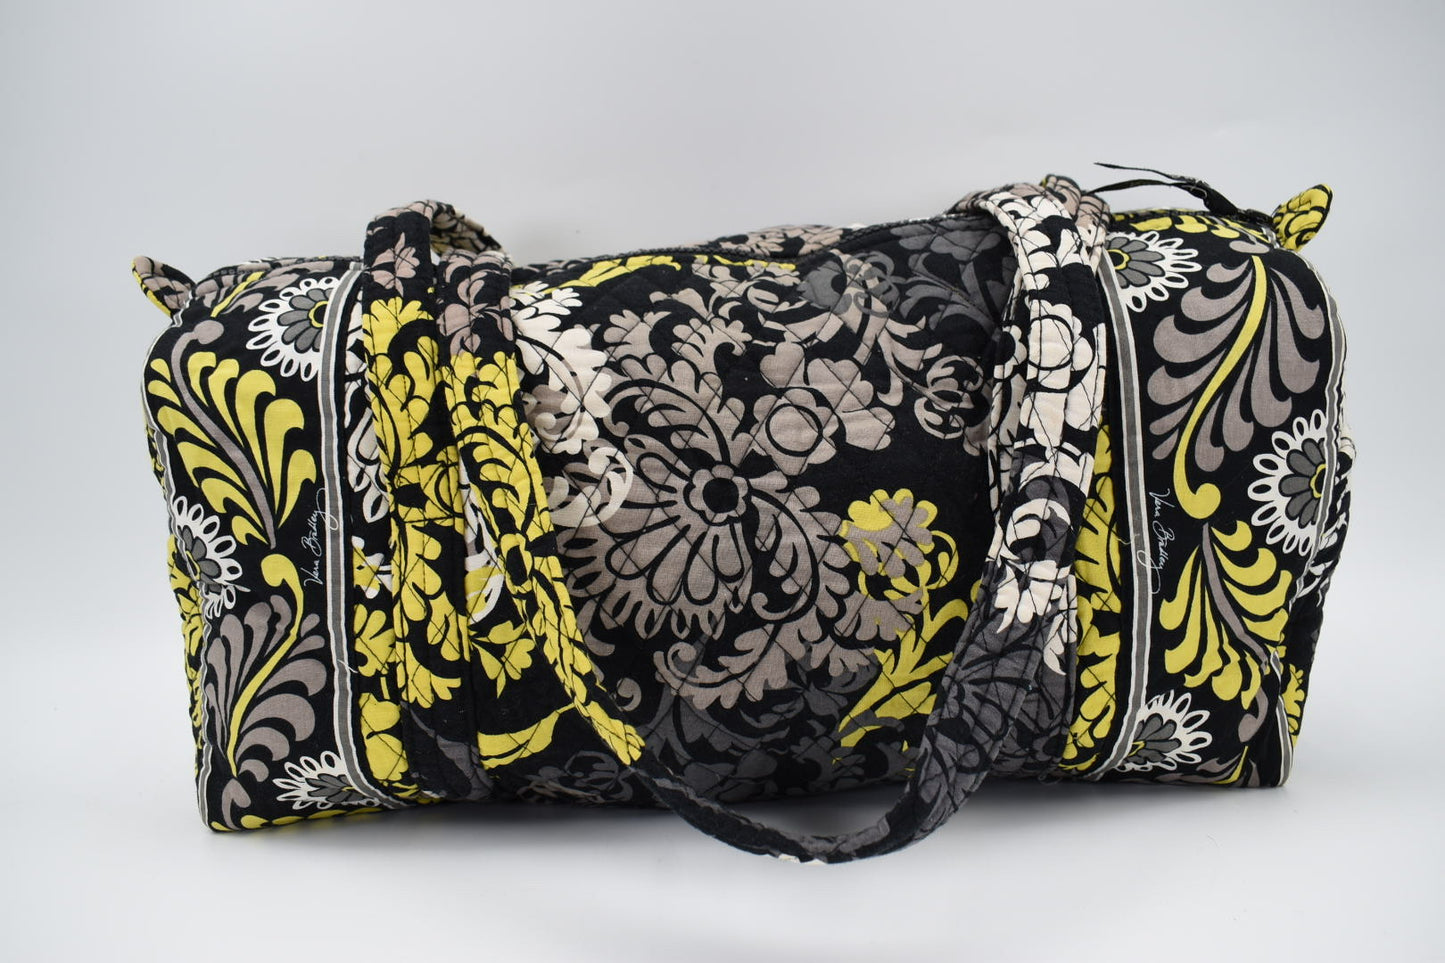 Vera Bradley Small Duffel Bag in "Baroque" Pattern